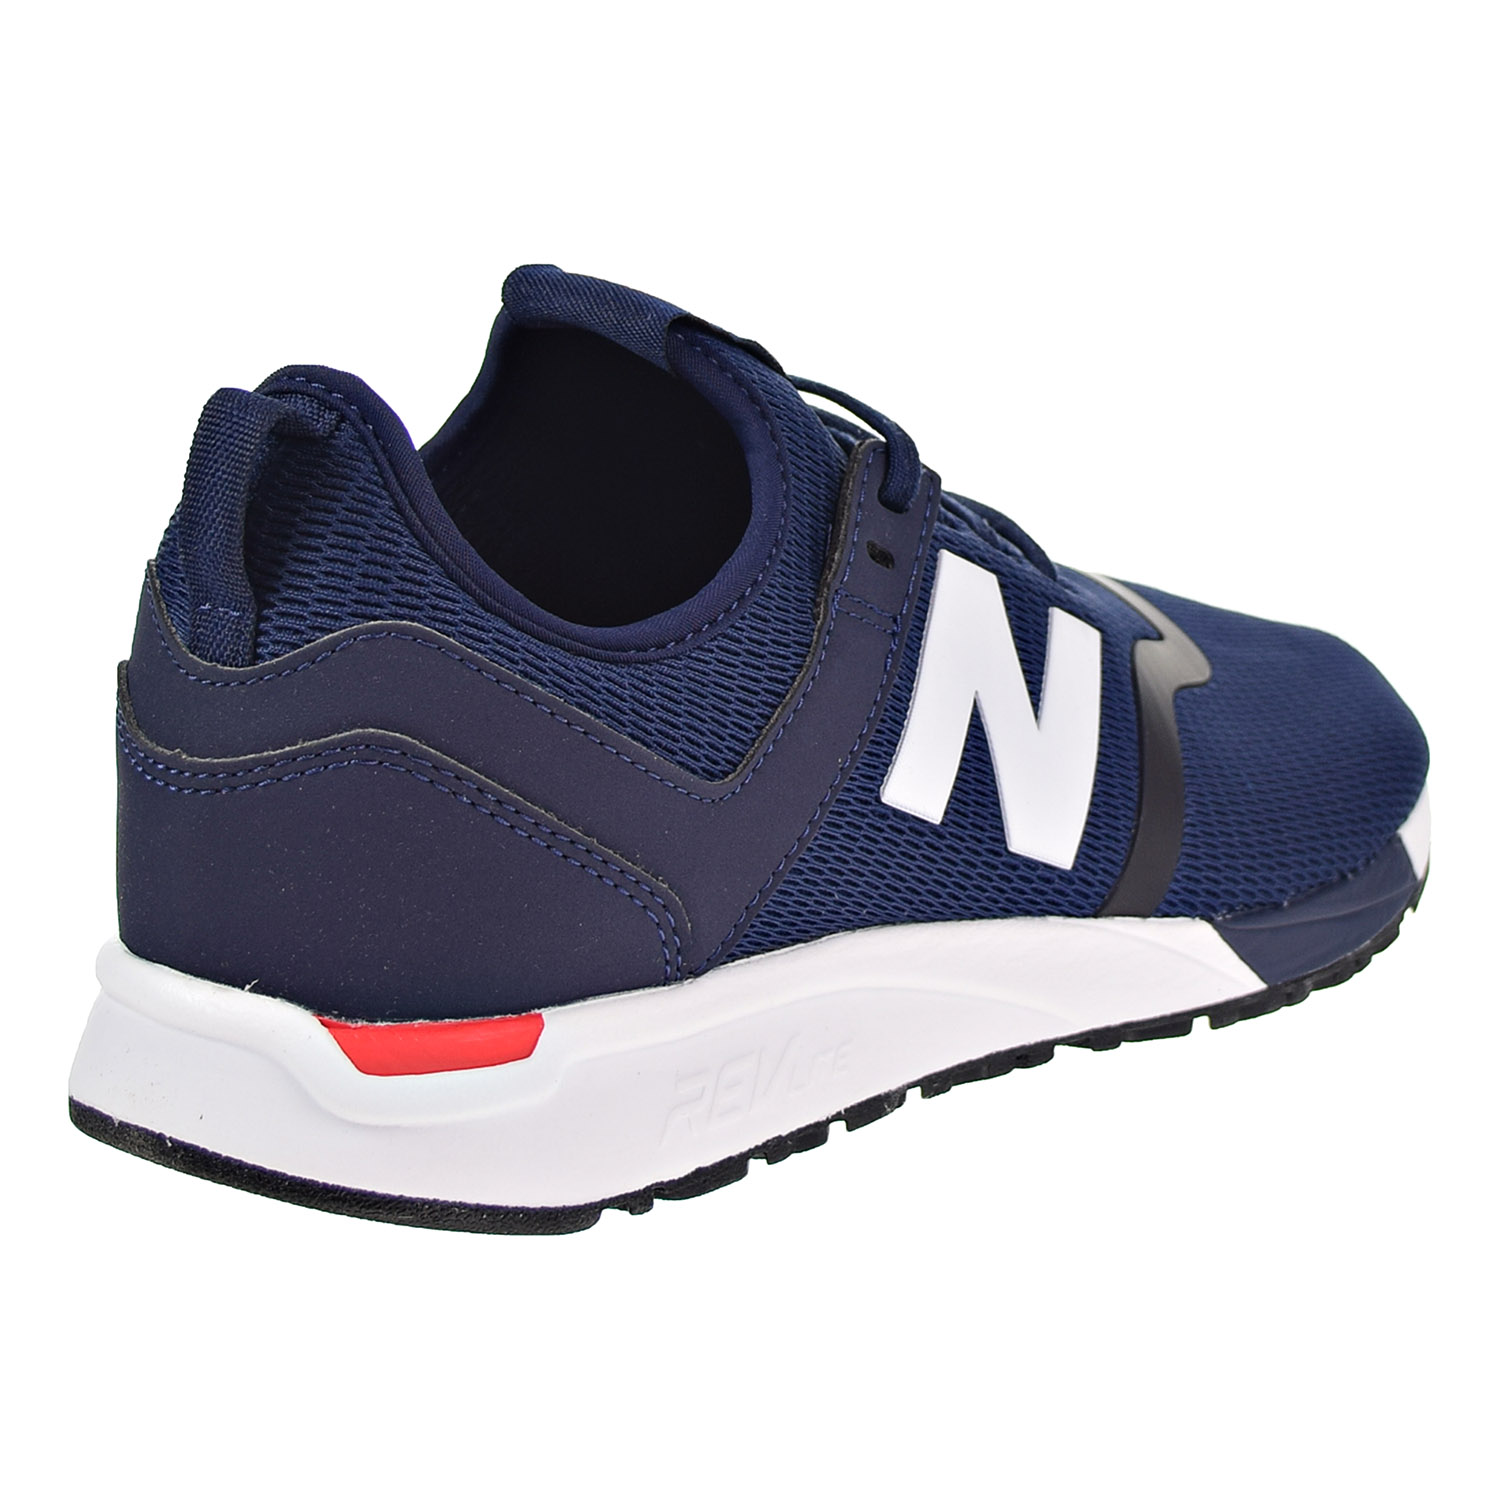 New Balance 247 Decon Men's Shoes Navy-White-Red MRL247-DH | eBay